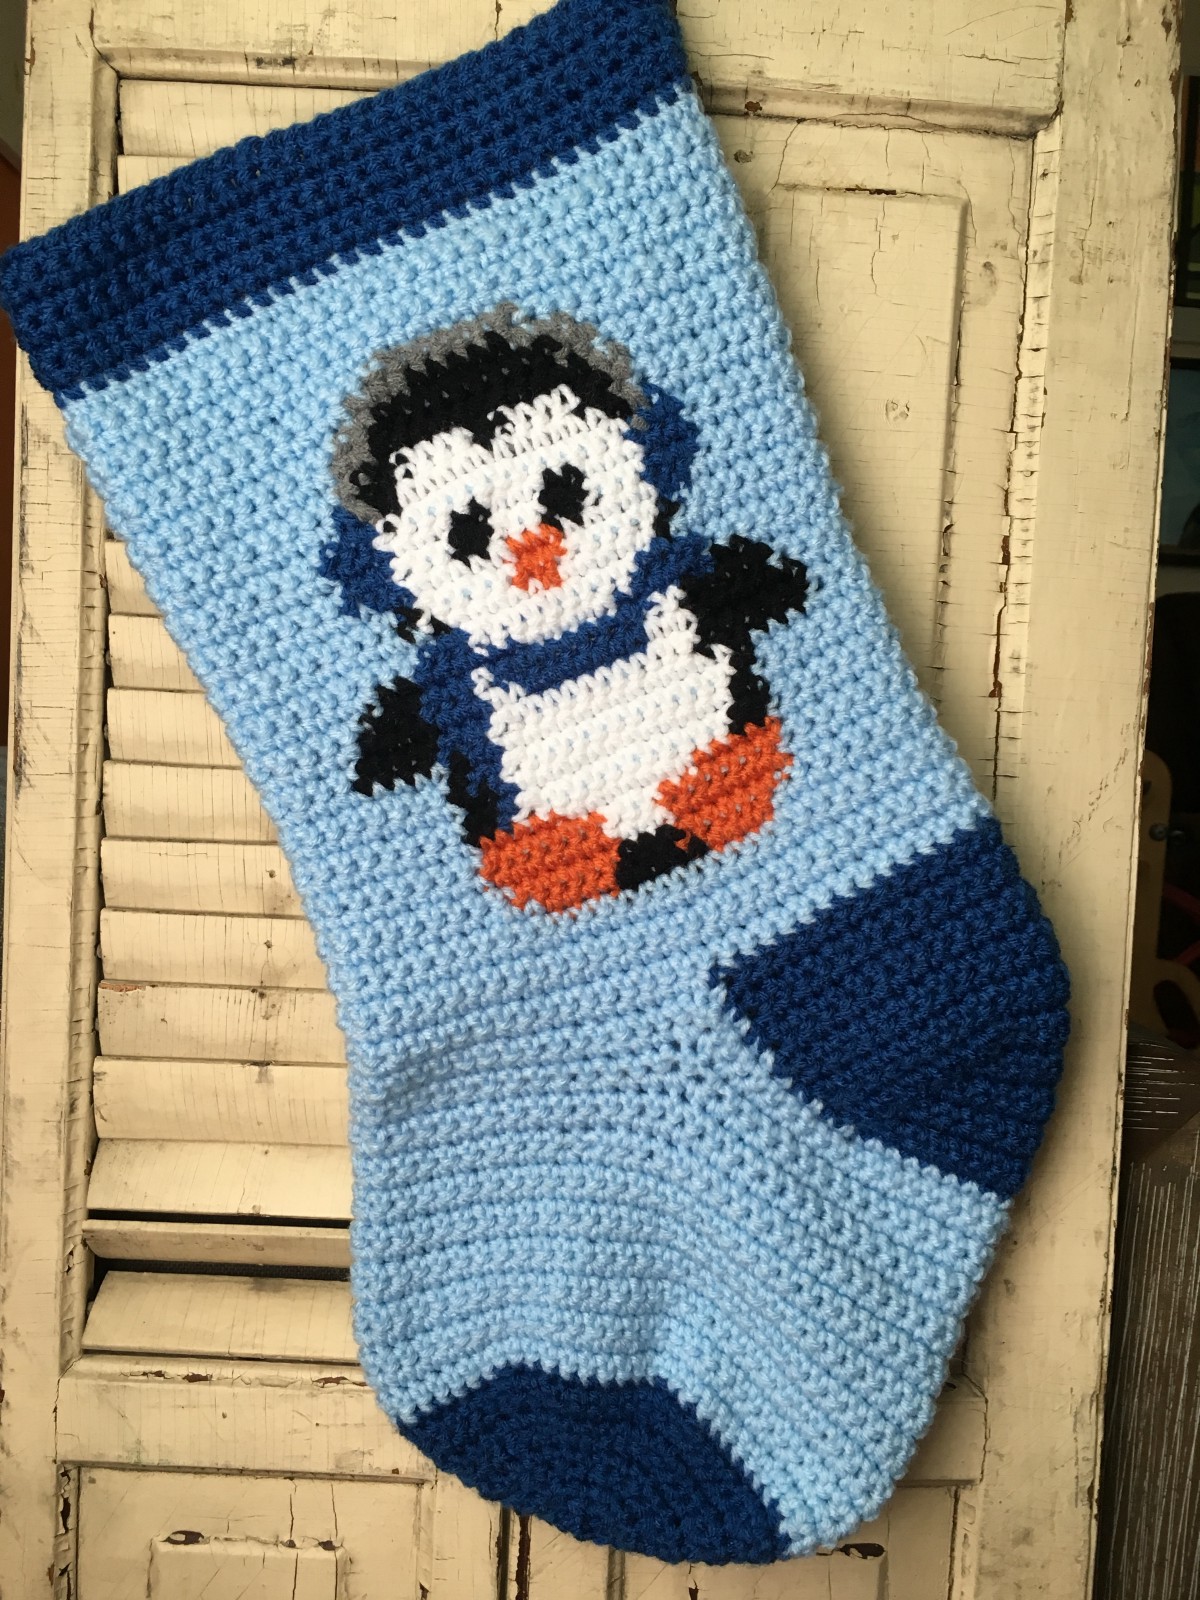 My baby penguin stocking design